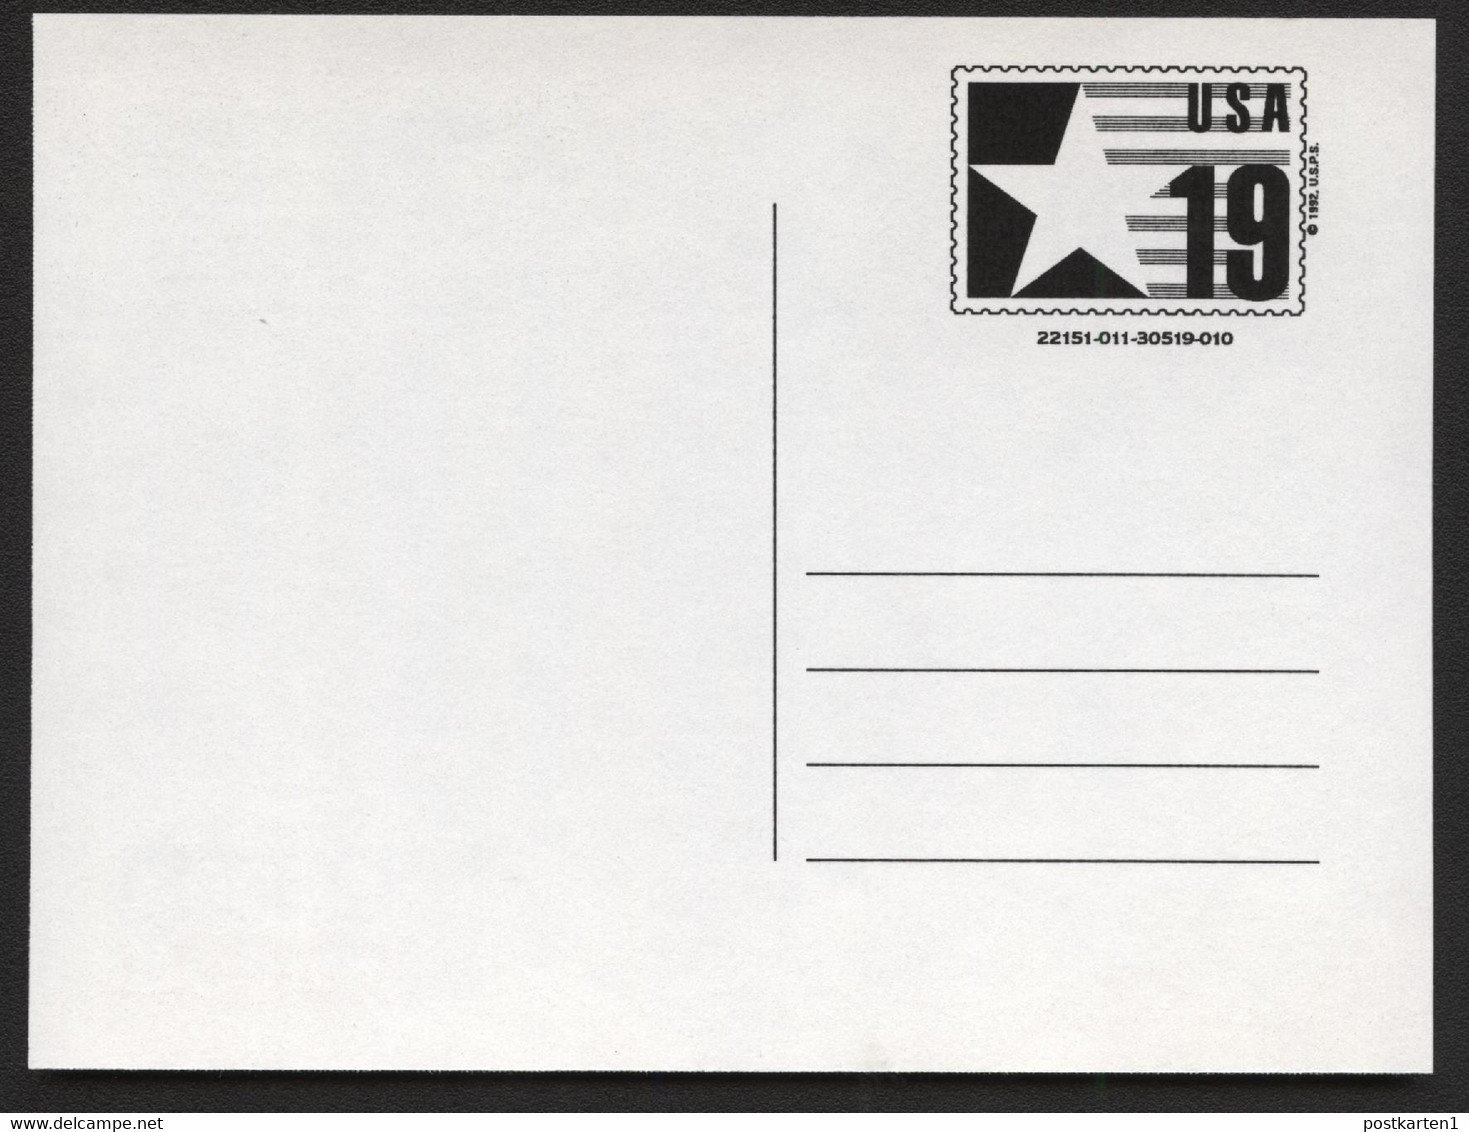 CVUX3 Postal Card Postal Buddy Type B Mint 1992 $8.50 - 1981-00